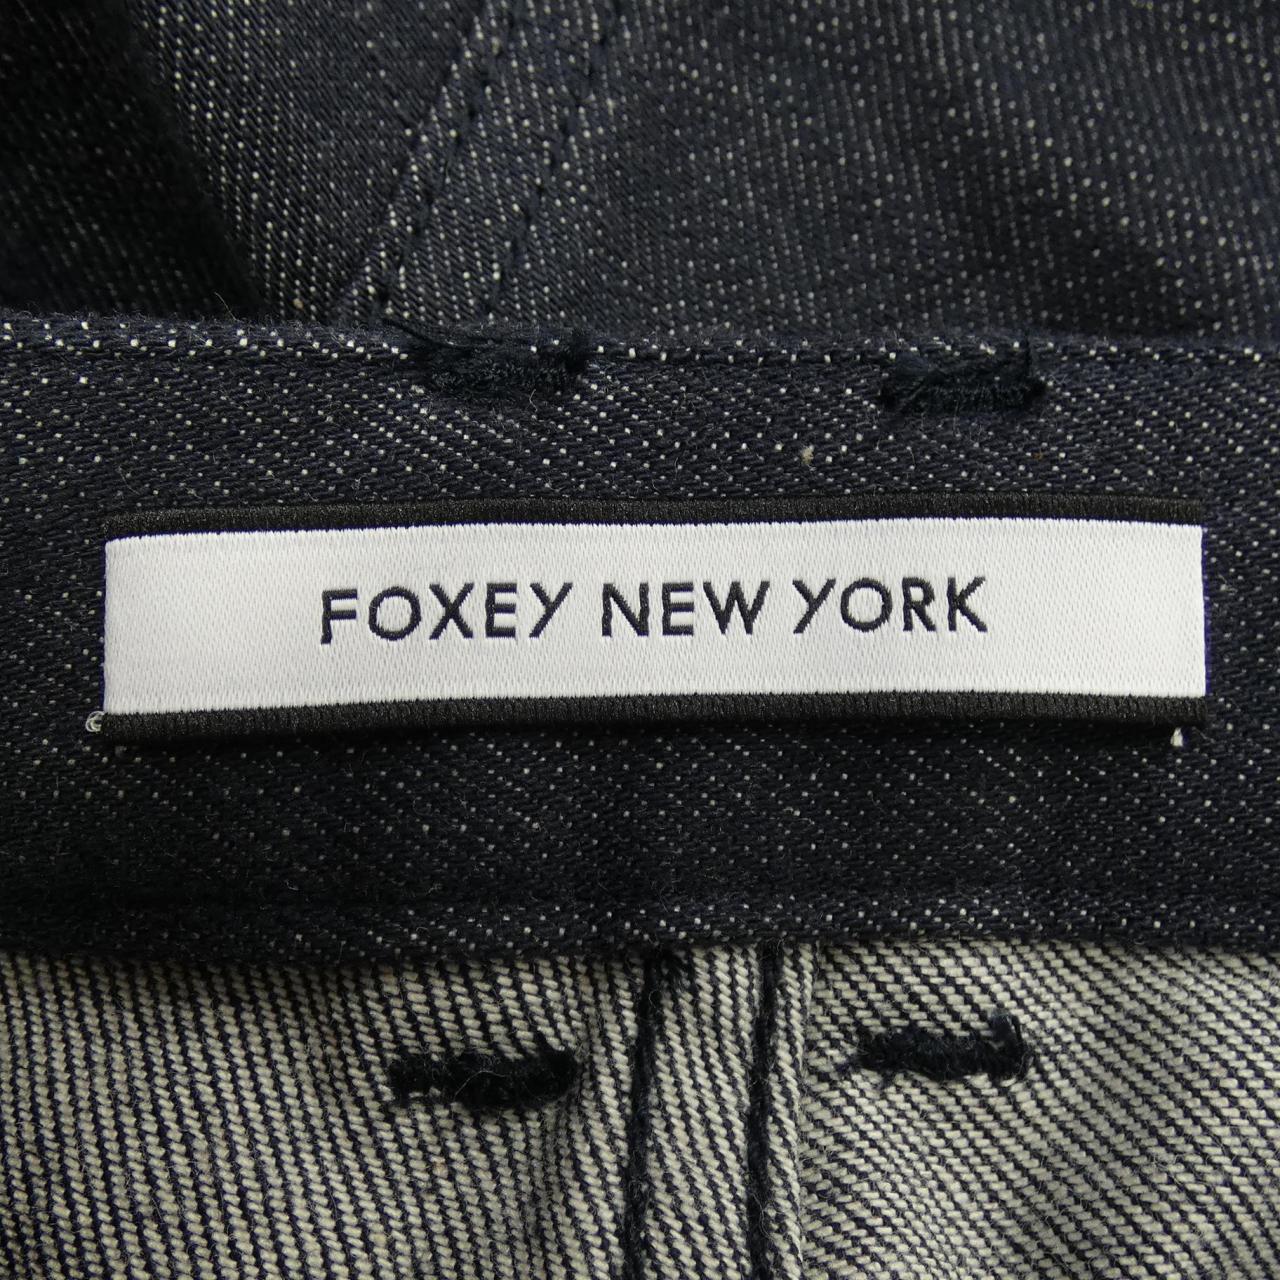 Foxy New York FOXEY NEW YORK jeans